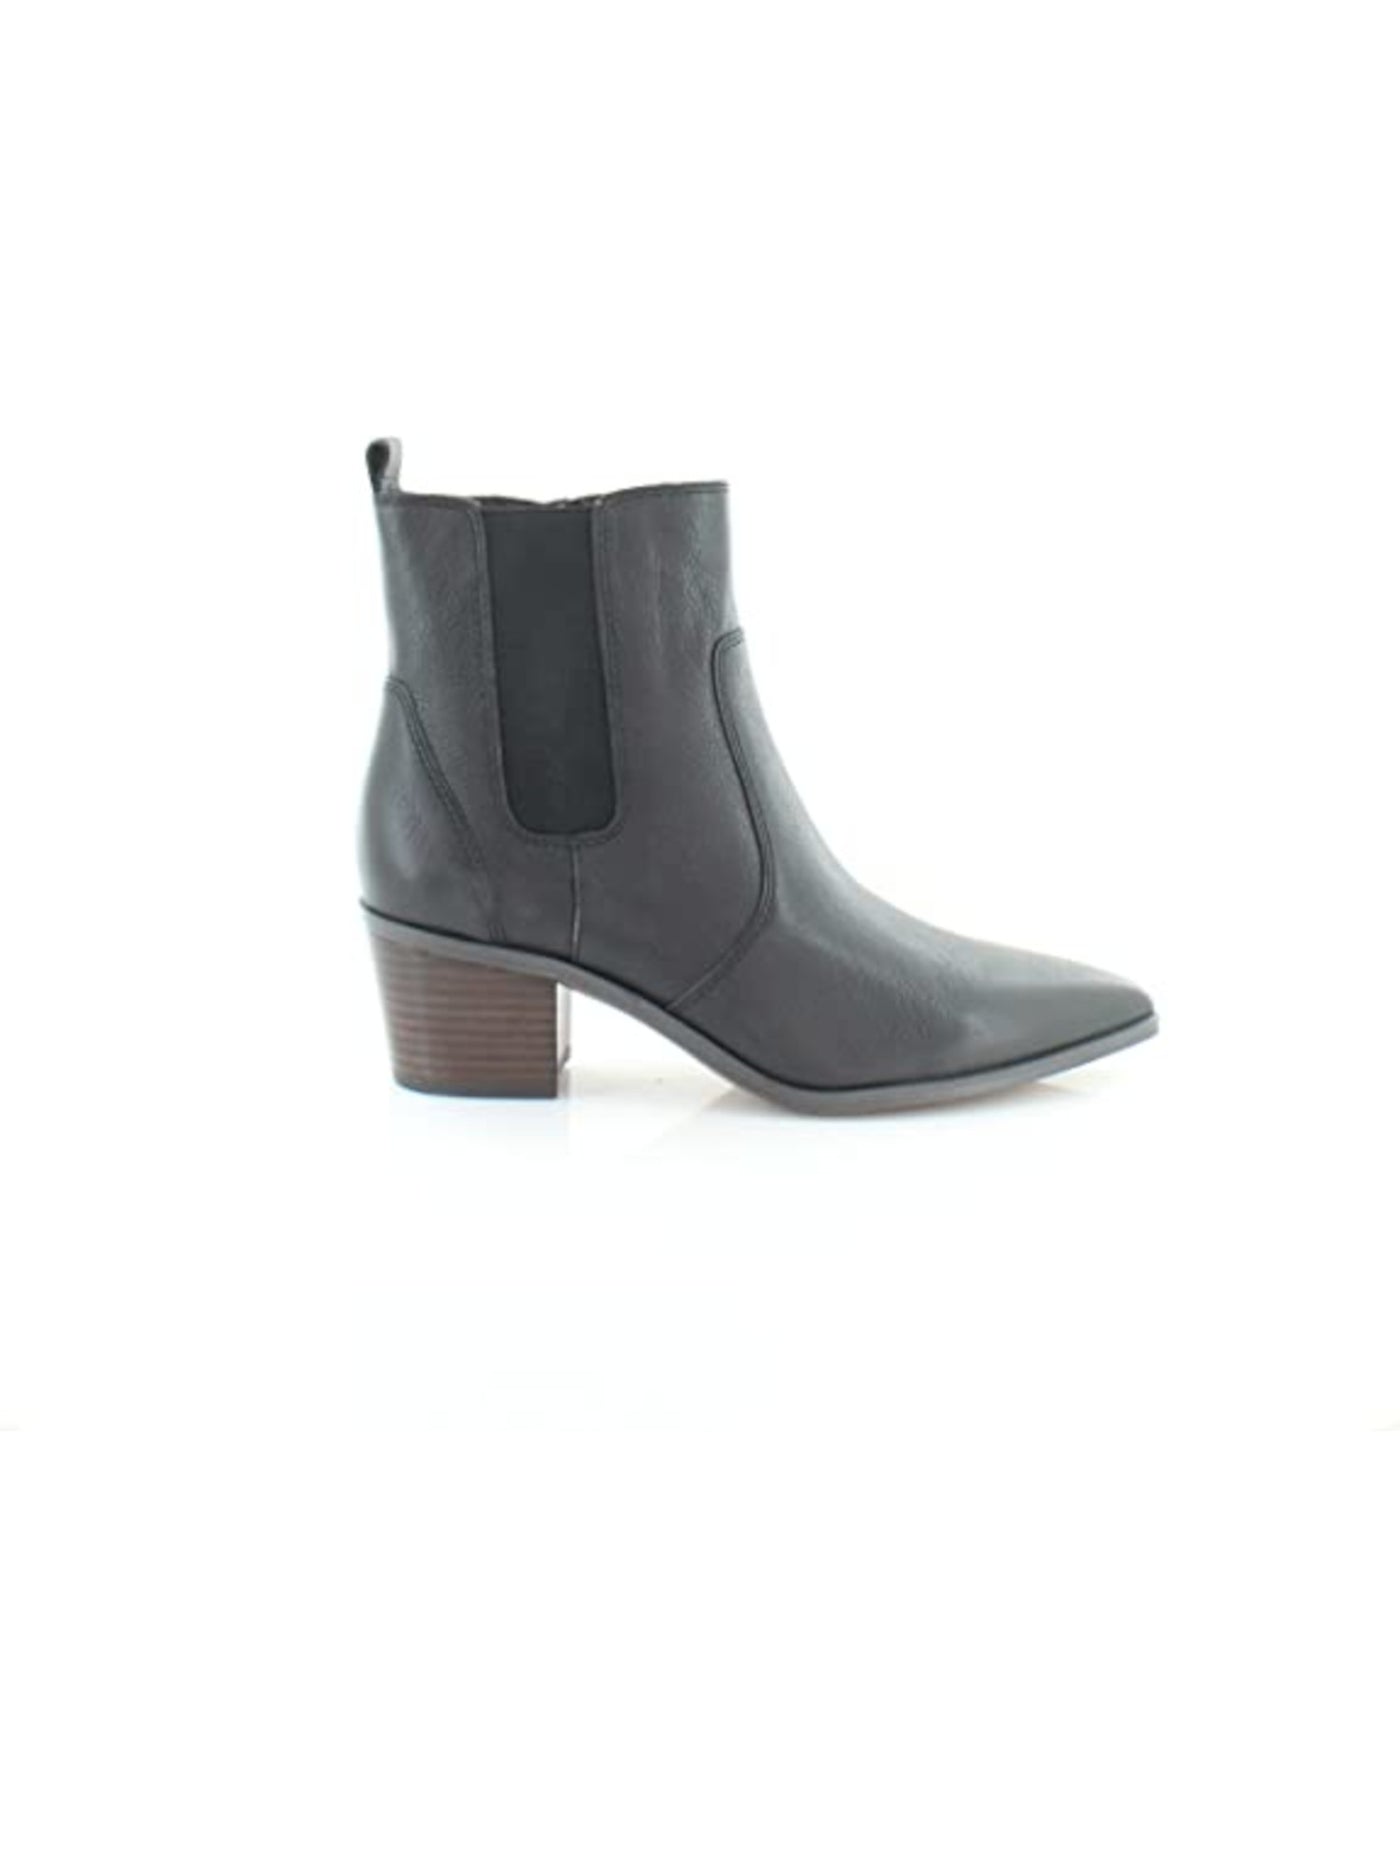 FRANCO SARTO Womens Black Goring Pull Tab Comfort Sager Pointed Toe Block Heel Zip-Up Leather Dress Booties 8.5 M